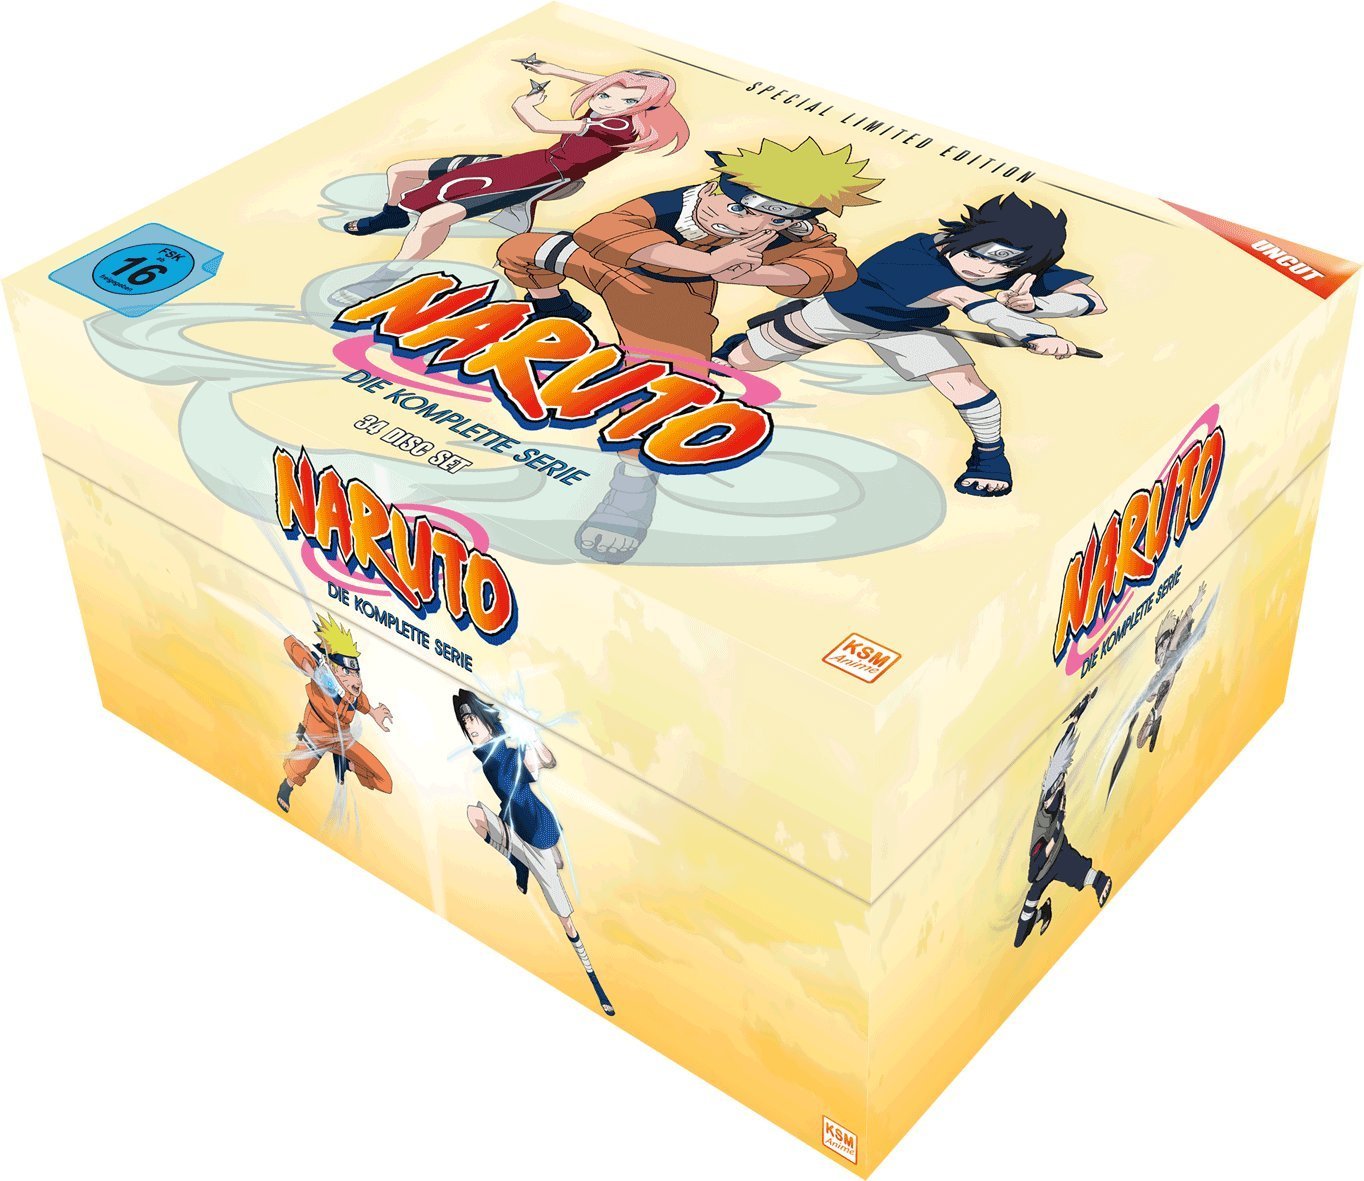 Naruto - Gesamt-Box (Special Limited Edition mit 8 Postkarten) [DVD] Image 2